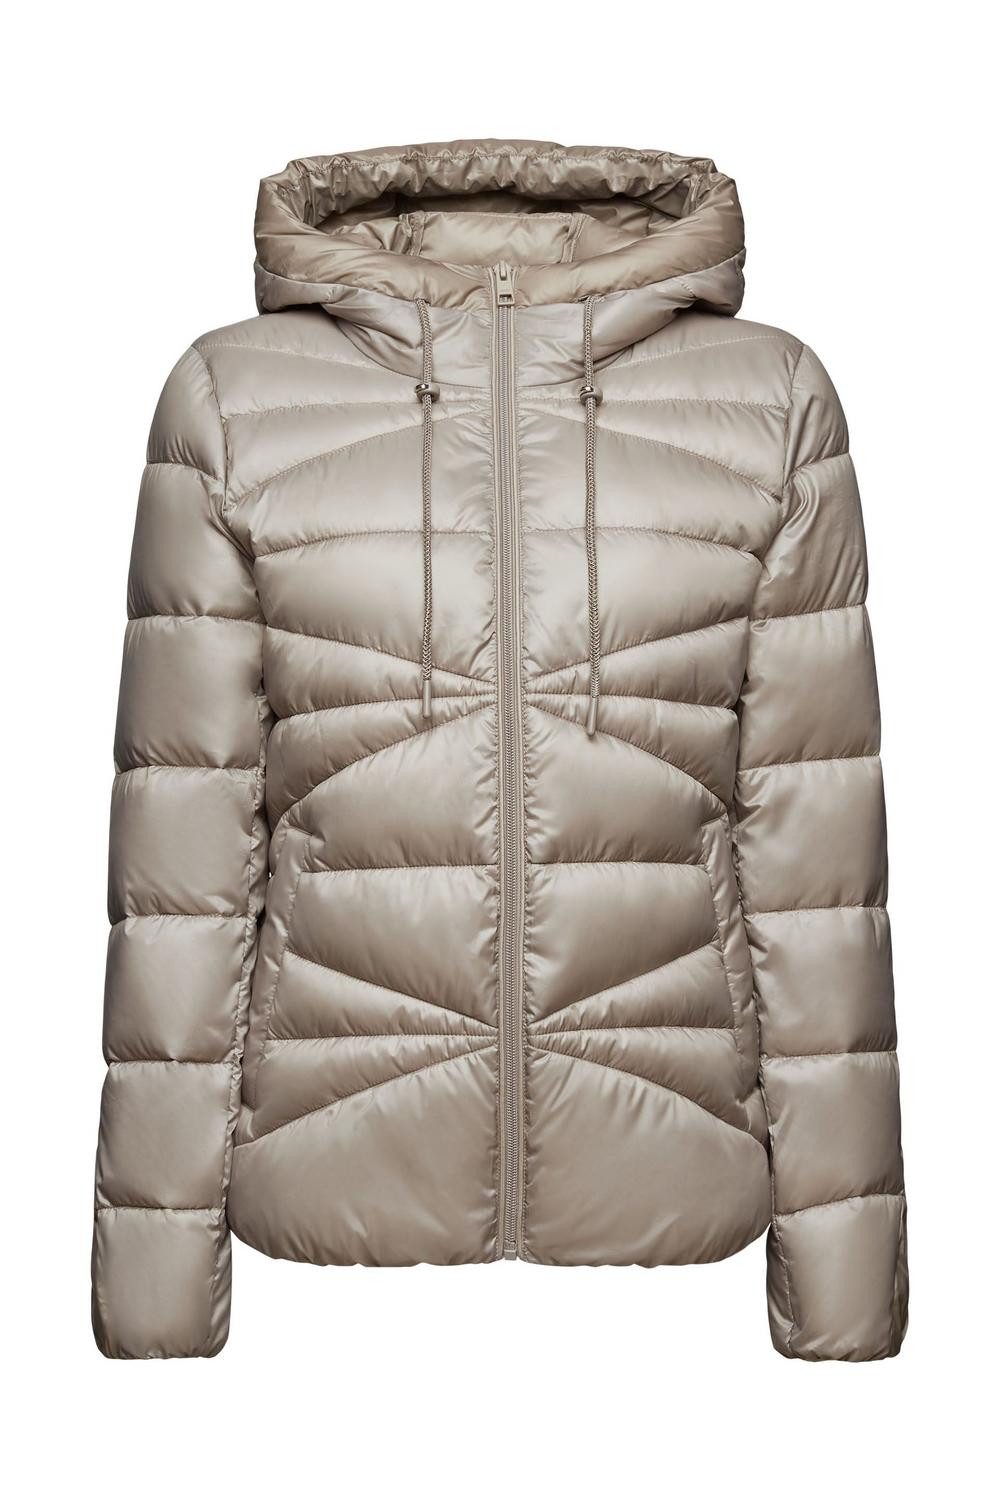 Esprit Outdoorjacke Jackets outdoor woven